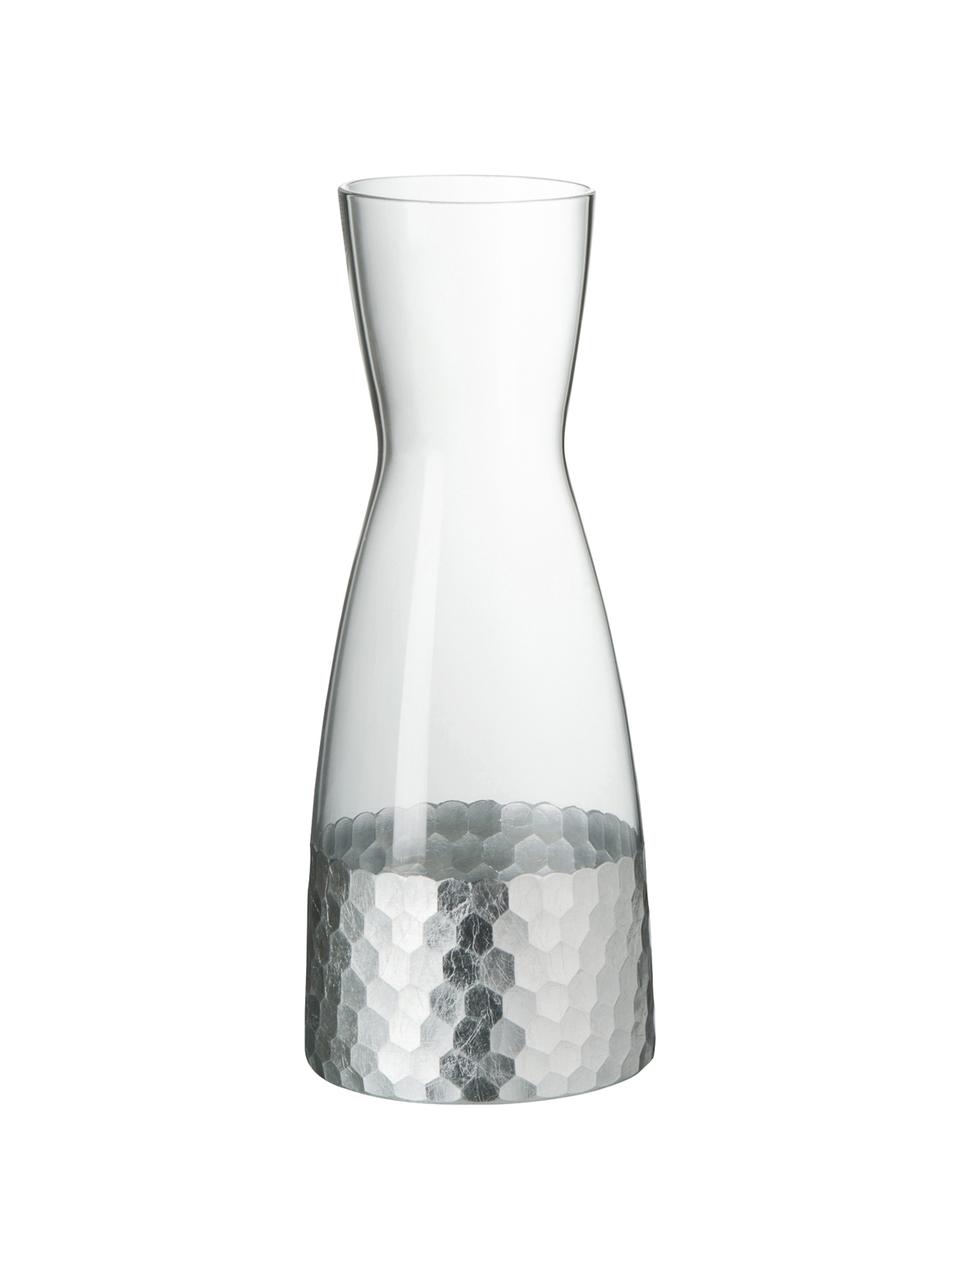 Karaf Wasp met gehamerd edelstaal 1,1 L, Glas, Transparant, zilvergrijskleurig, H 26 cm